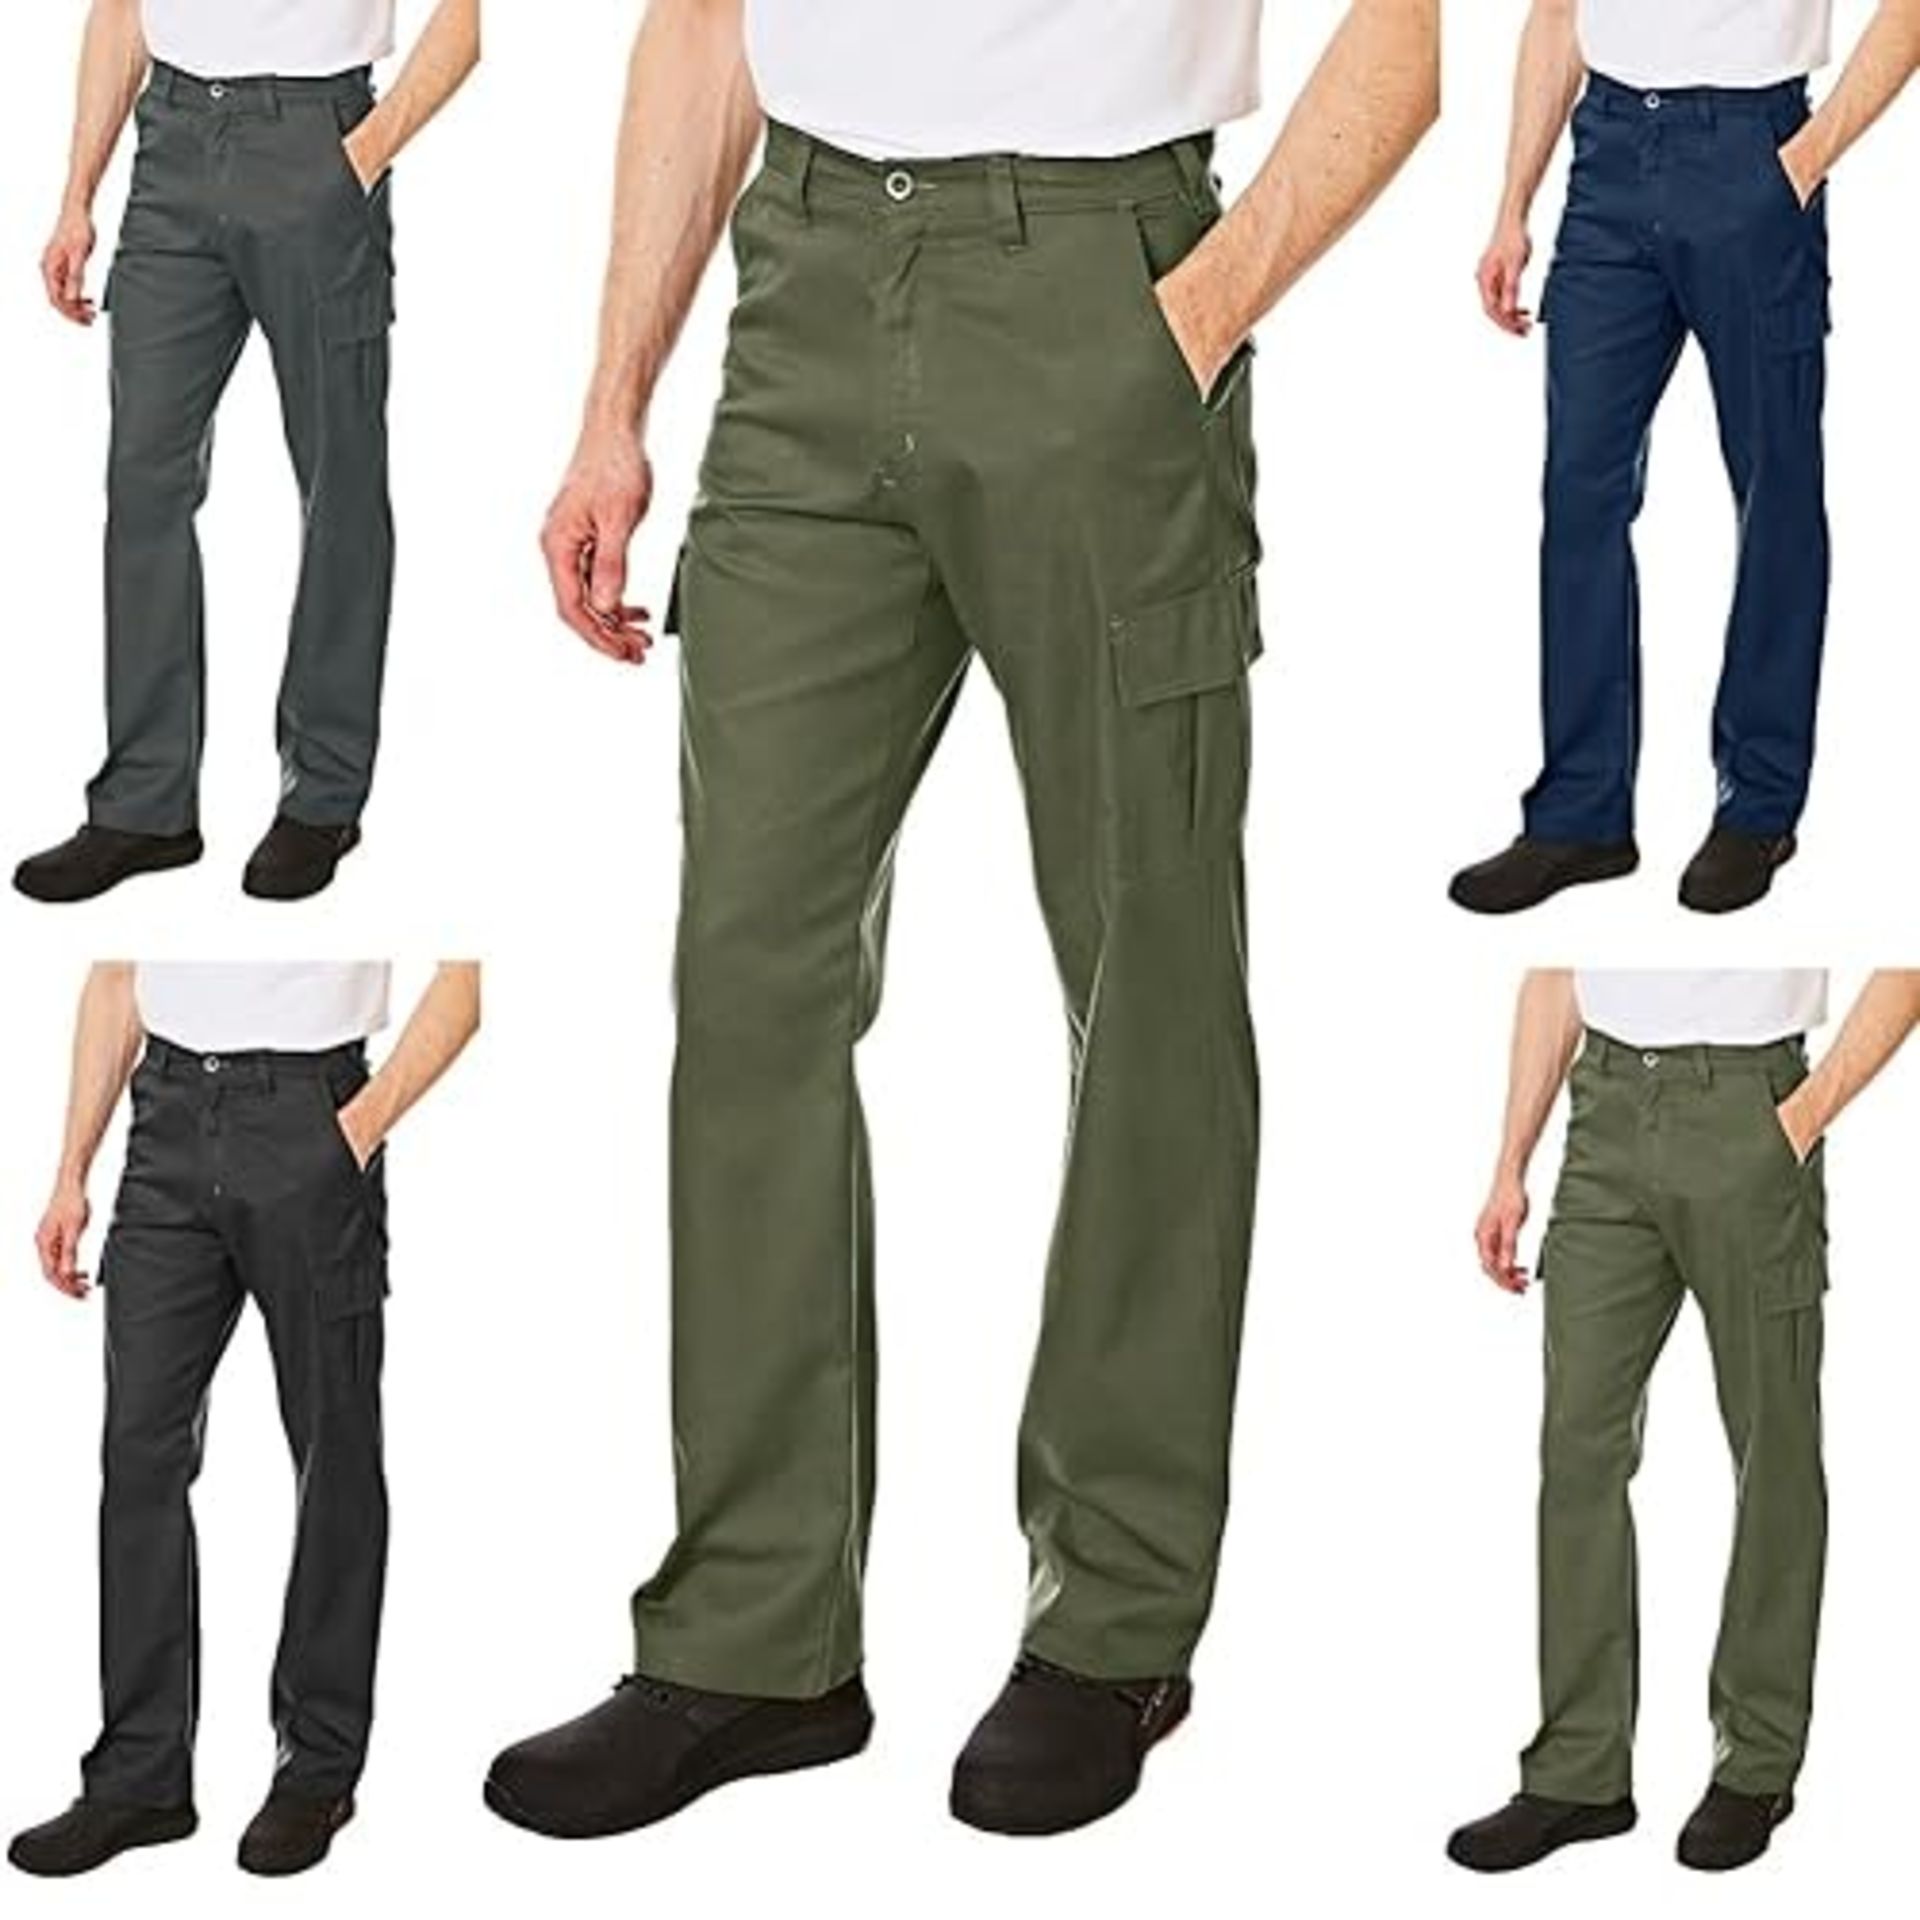 Lee Cooper Men's Cargo Trouser, Khaki Green, 40W/33L (Long)